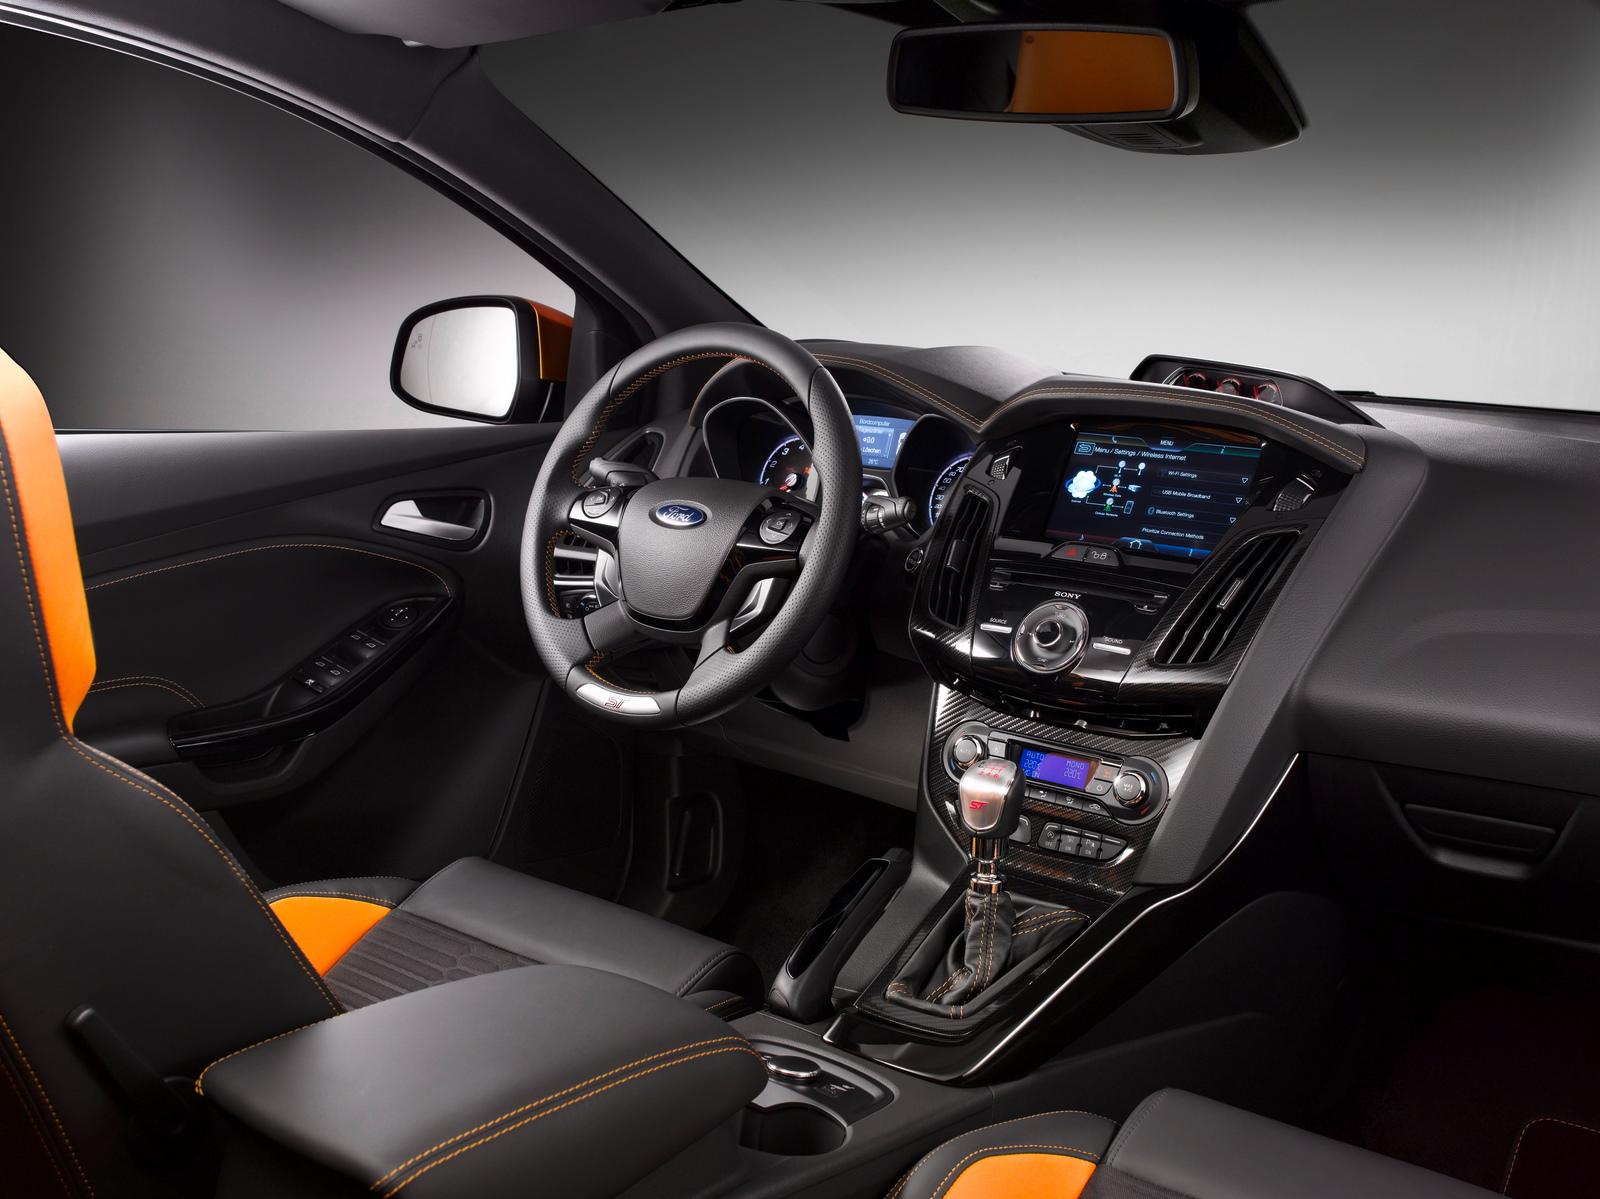 New Ford Focus ST Interior